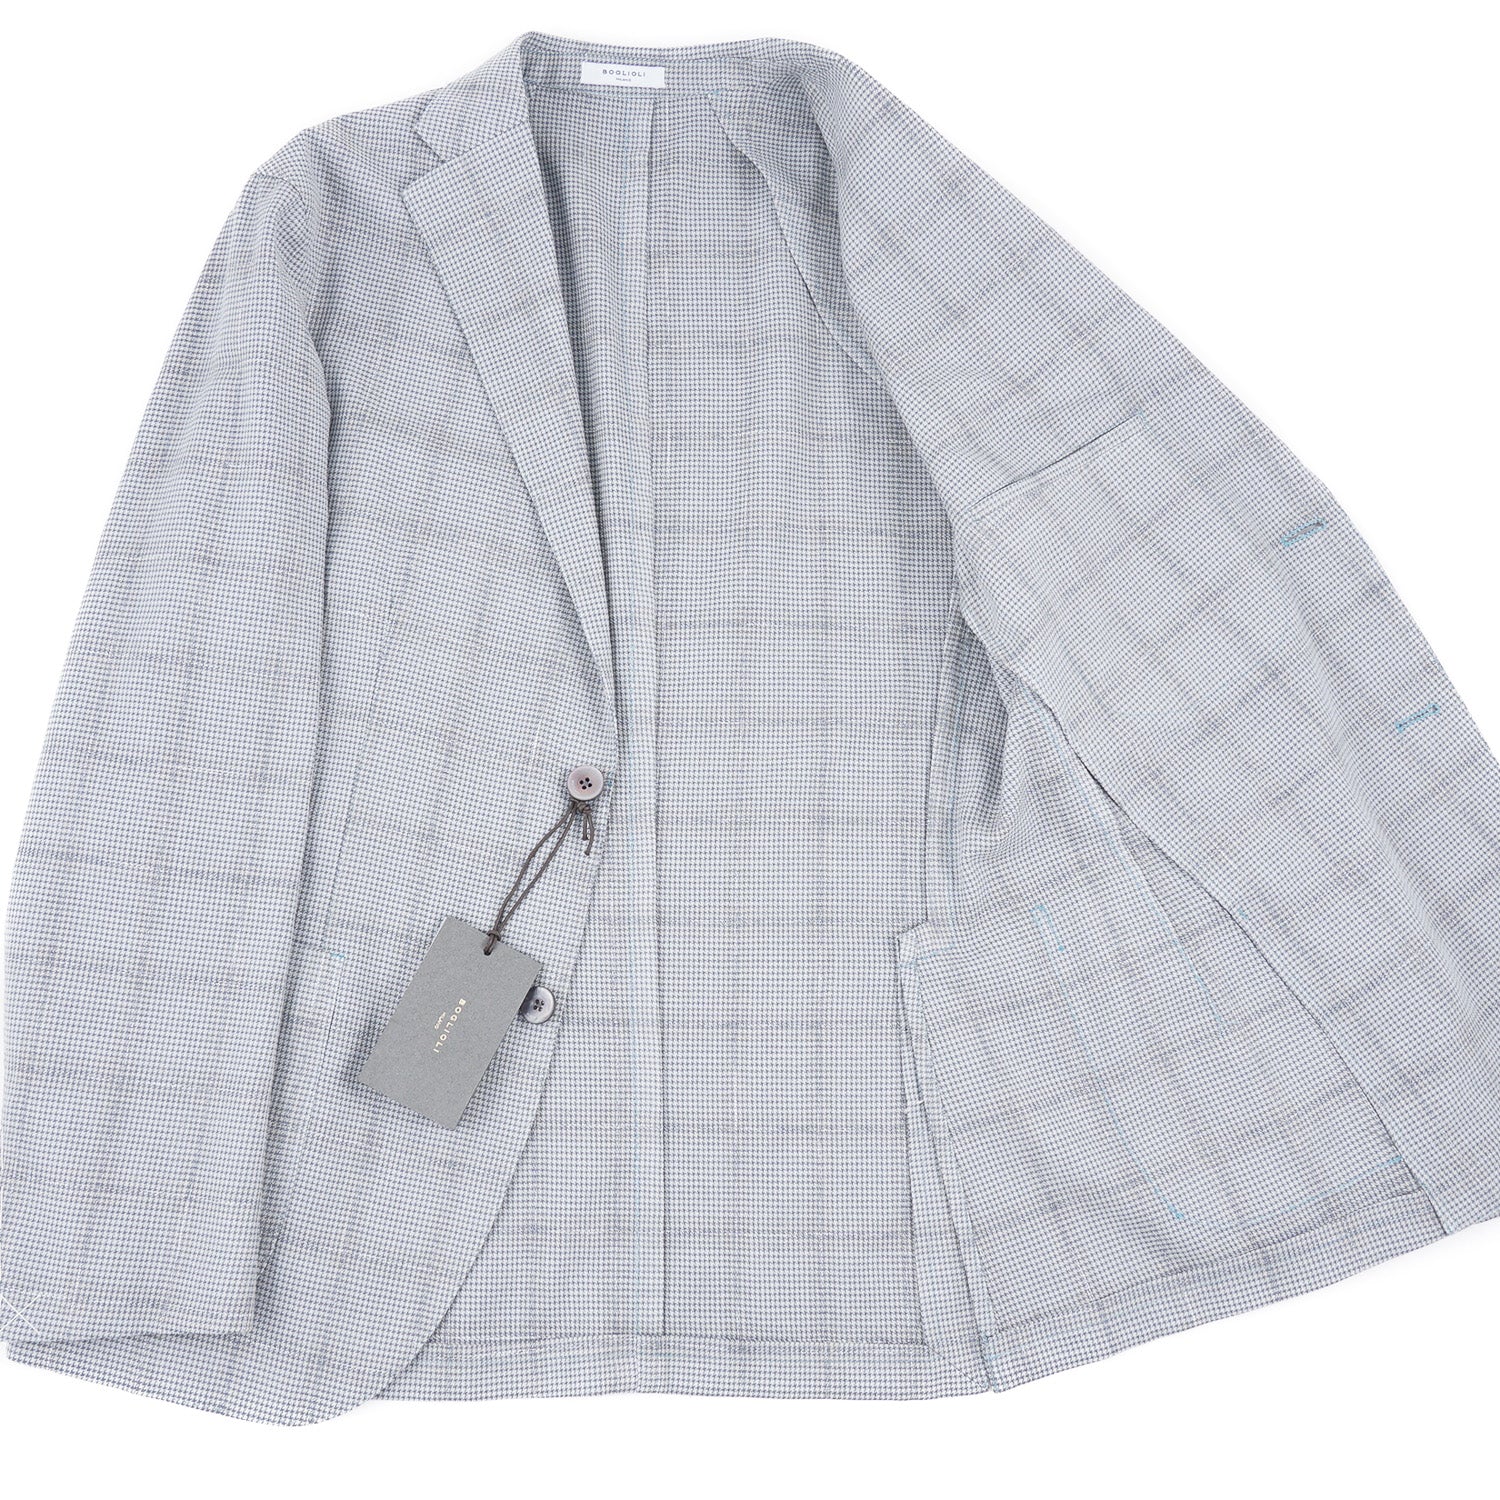 Boglioli Wool-Cotton-Mohair 'K Jacket' Sport Coat - Top Shelf Apparel